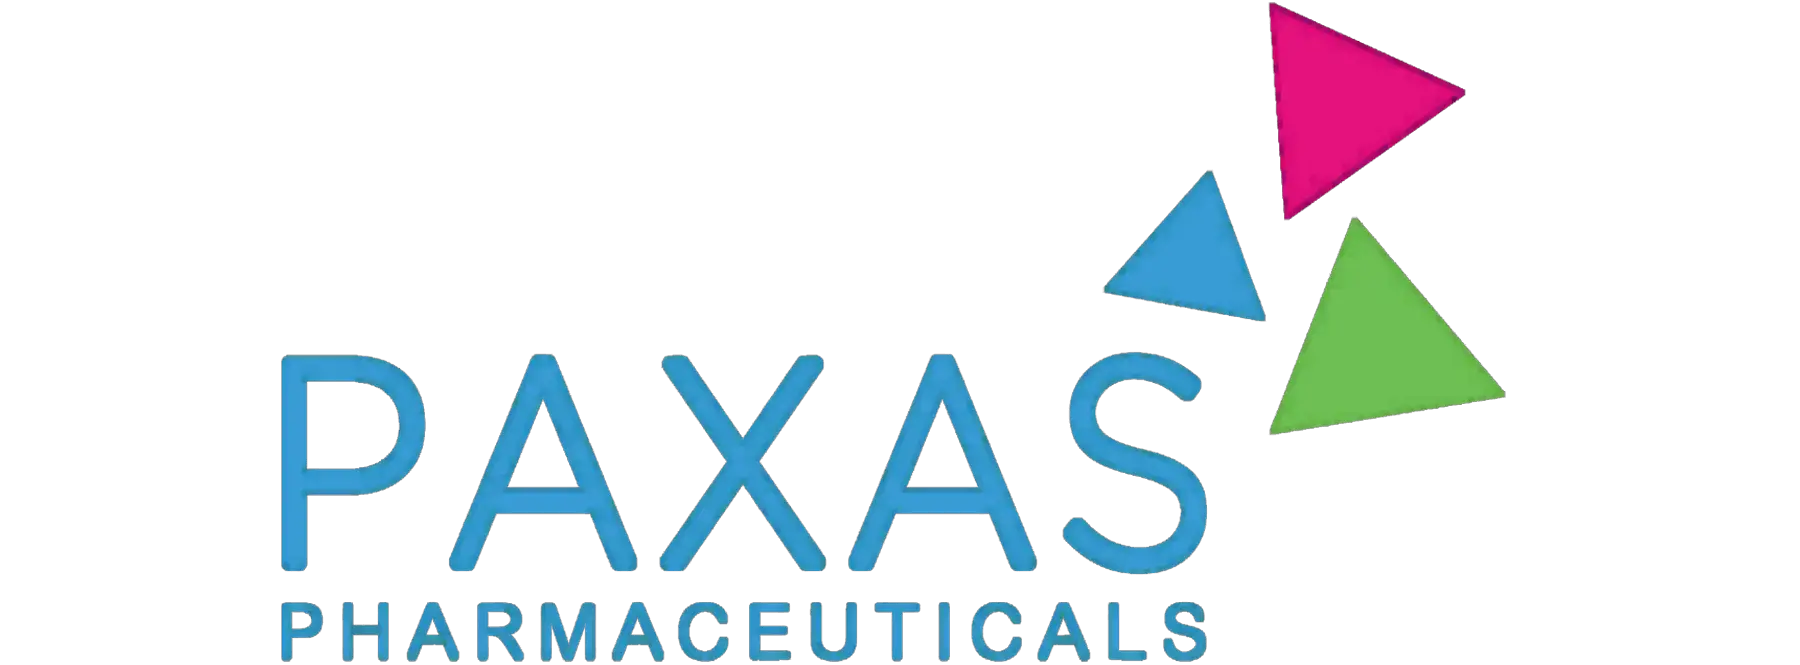 Paxas Pharmaceuticals LLC